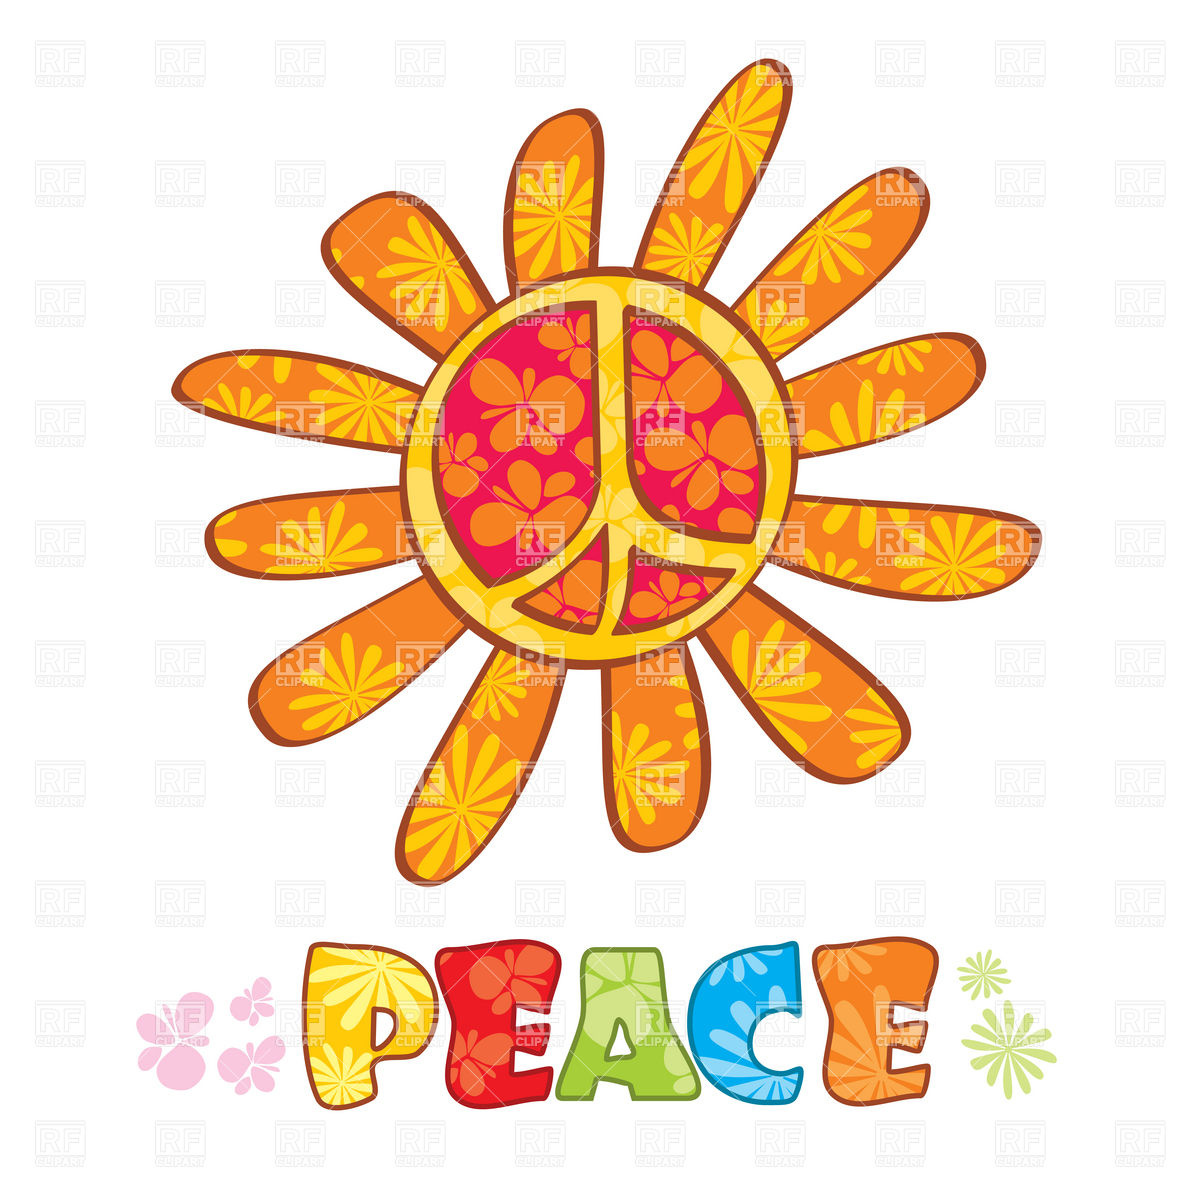 Hippie Peace Symbol With Petals 20135 Signs Symbols Maps Download